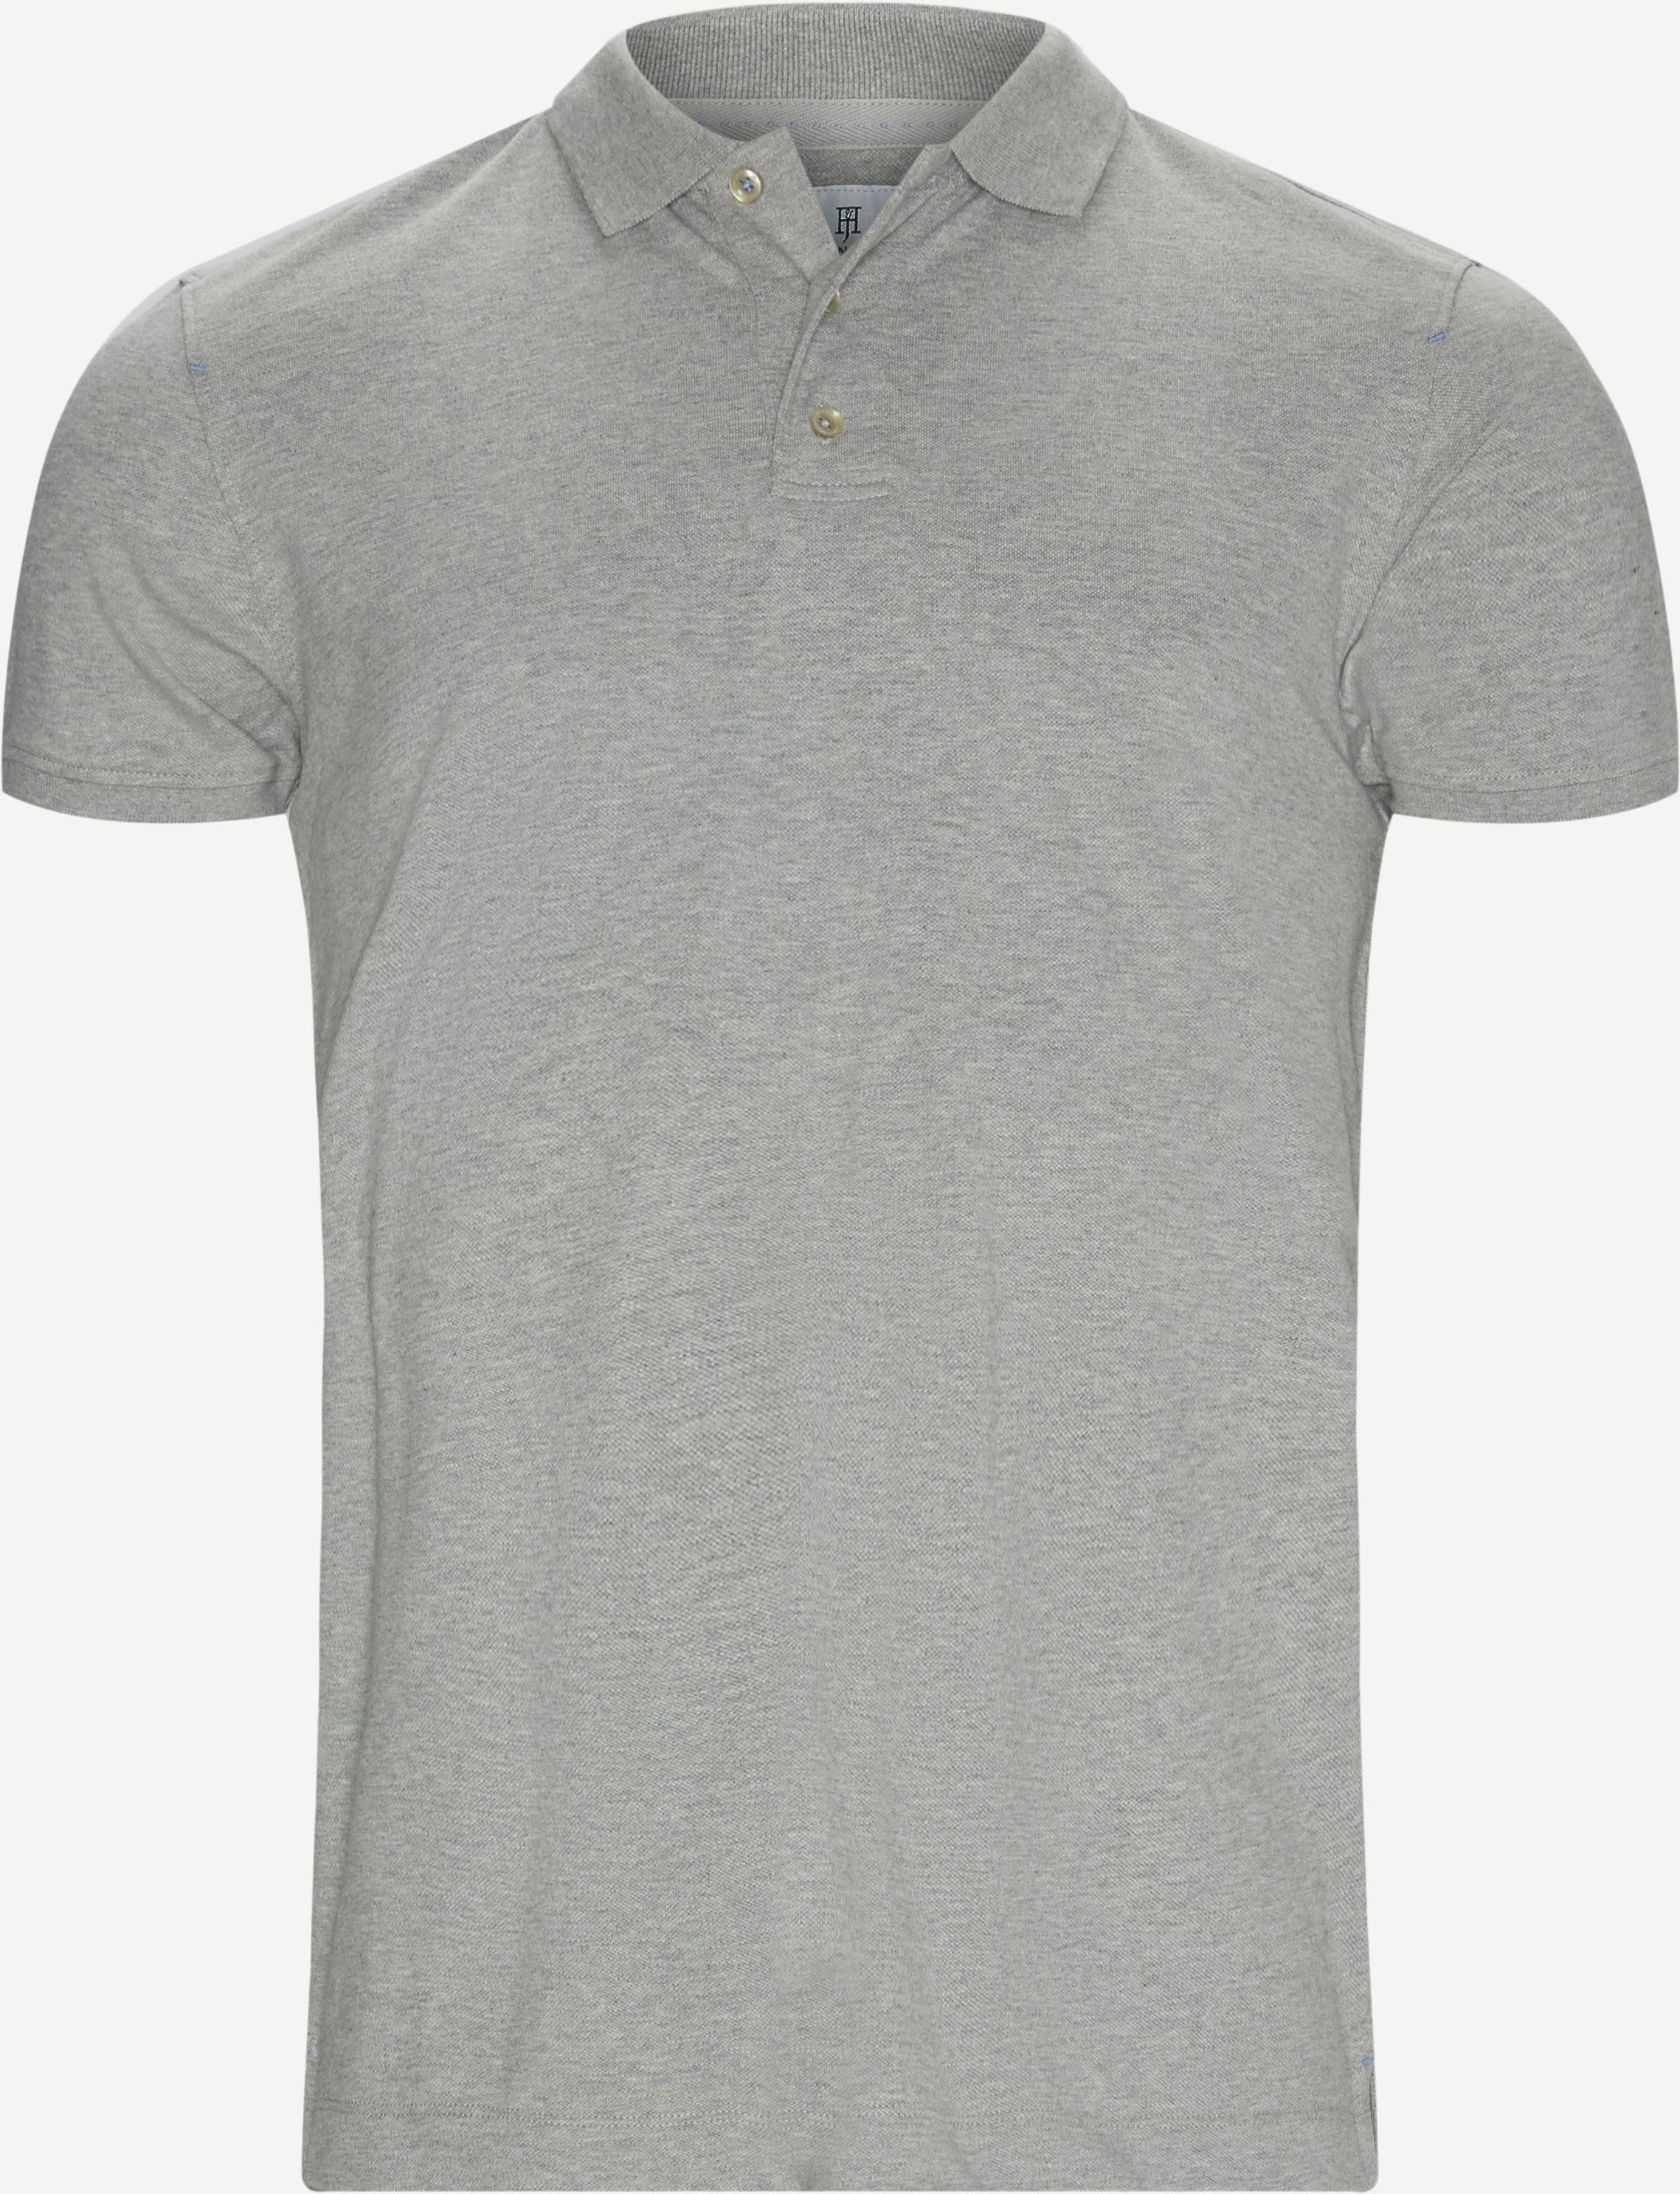 Pique Stretch Polo - T-shirts - Modern fit - Grå